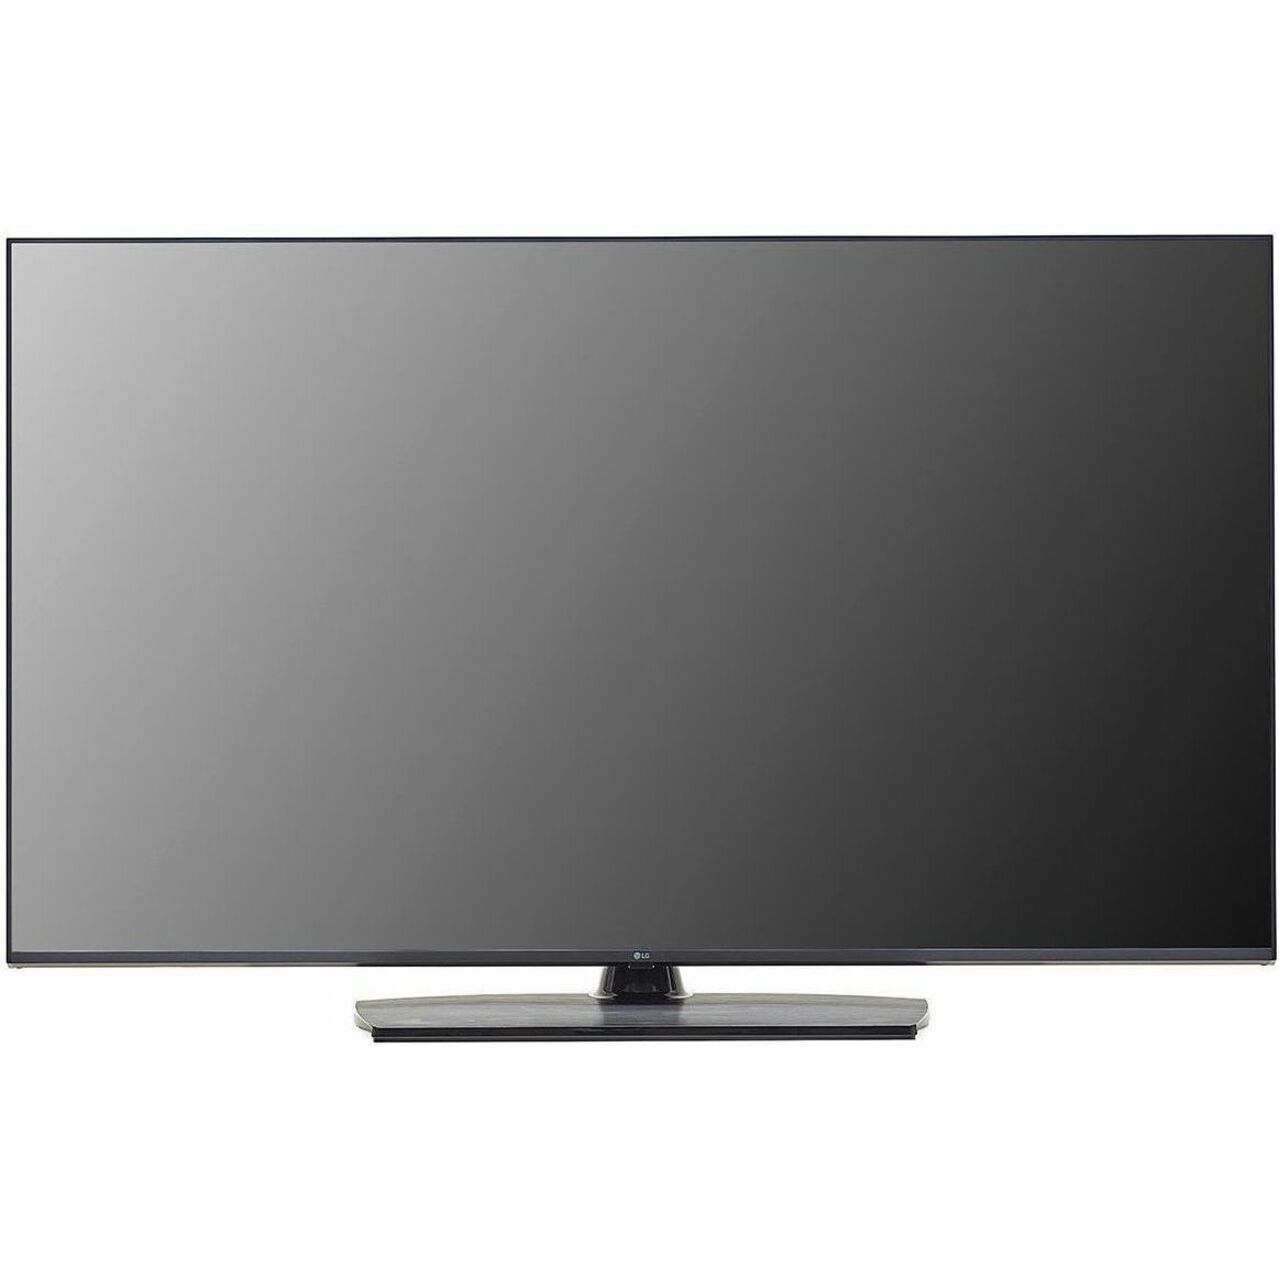 LG 55UN570H0UA Smart LED-LCD TV, 4K UHDTV, High Dynamic Range (HDR), Dark Ash Charcoal